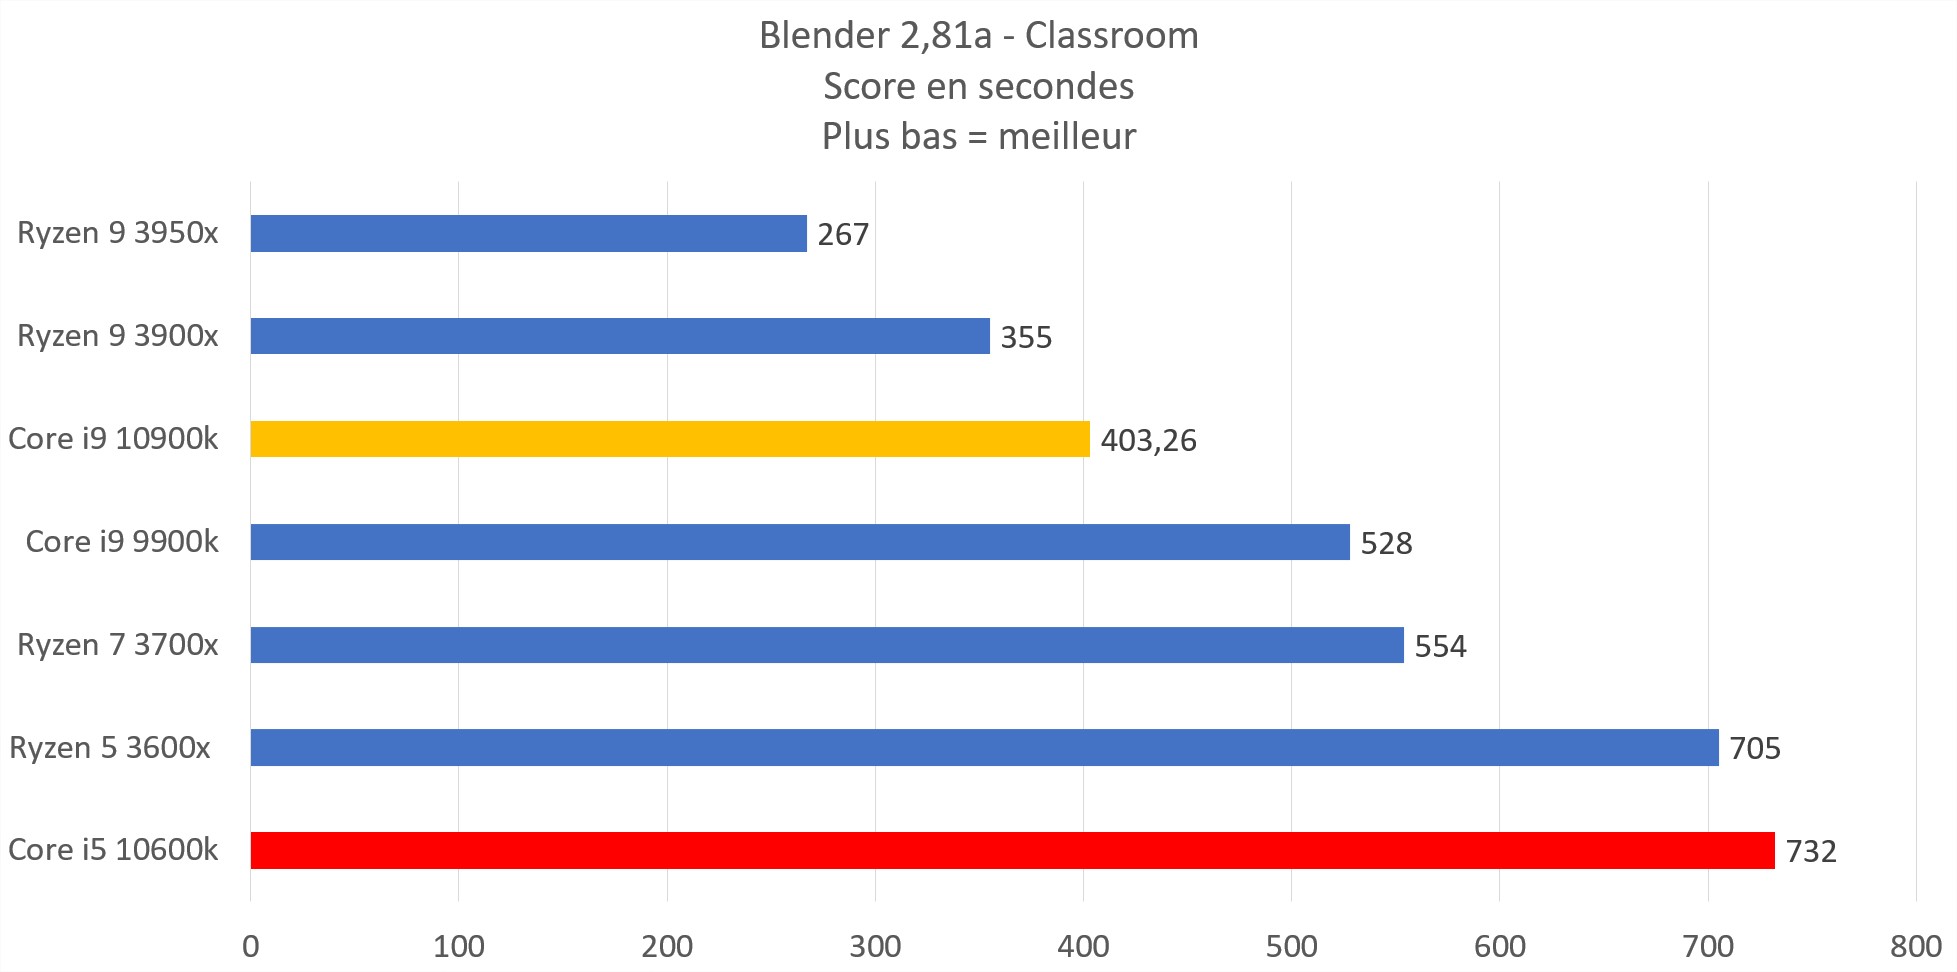 Blender classroom